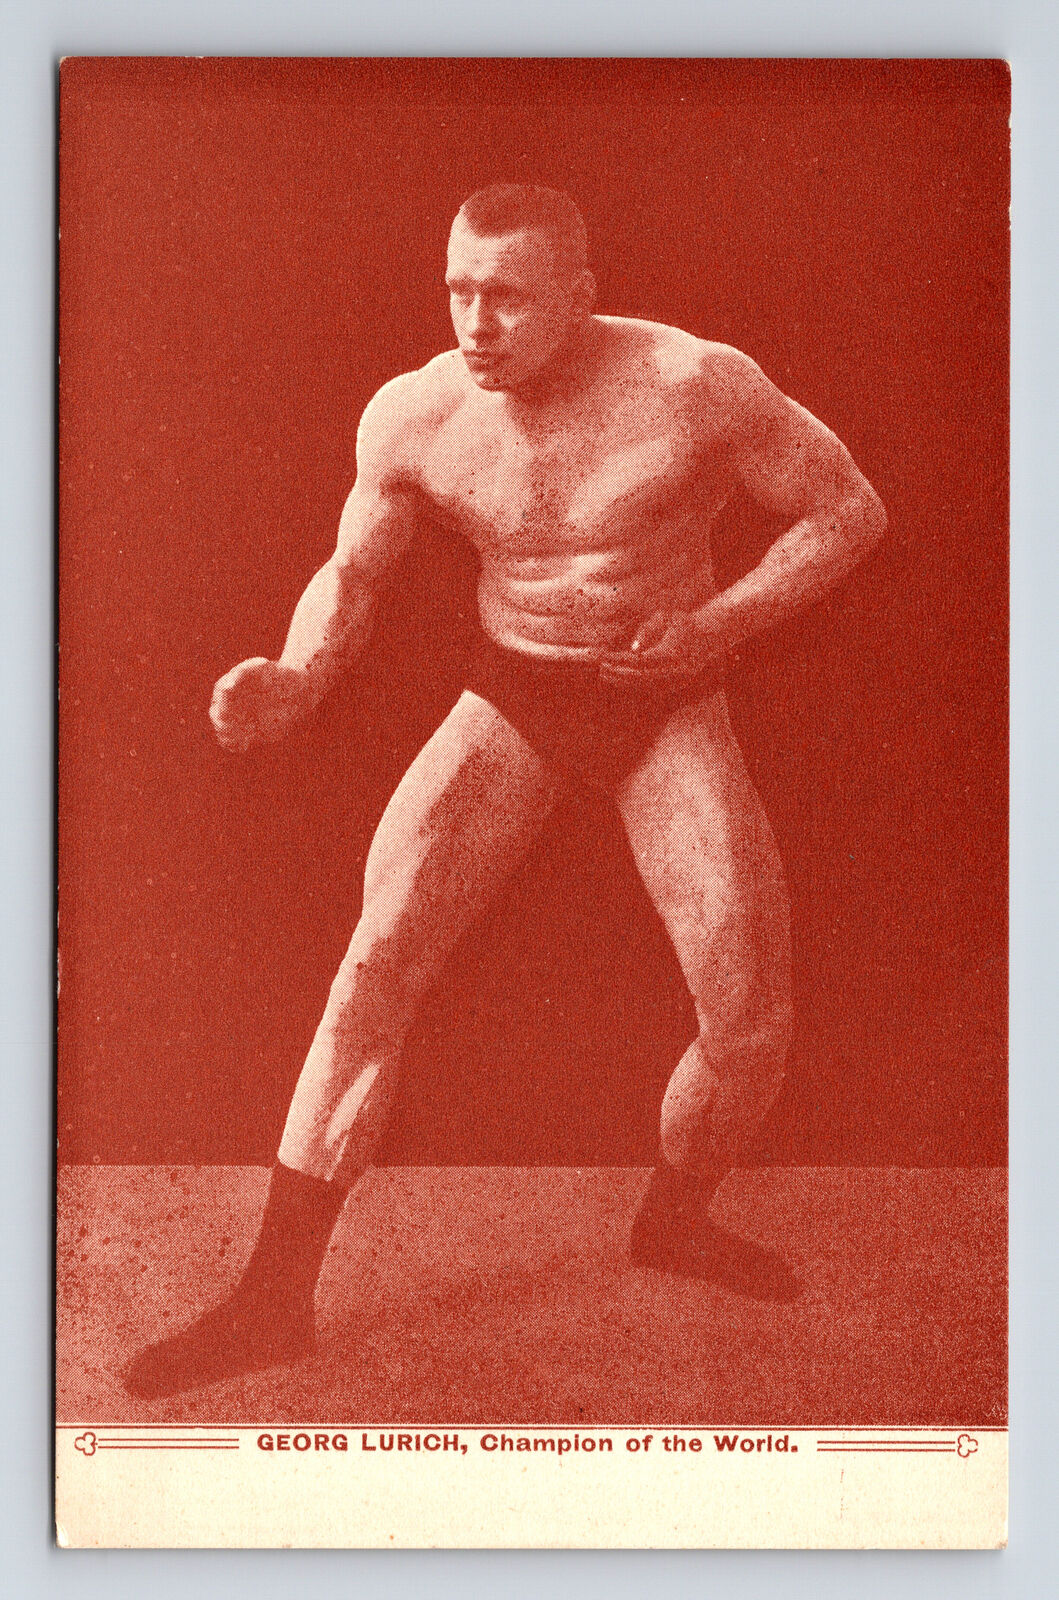 Russian Wrestler Georg Lurich Strongman Champion of the World Postcard